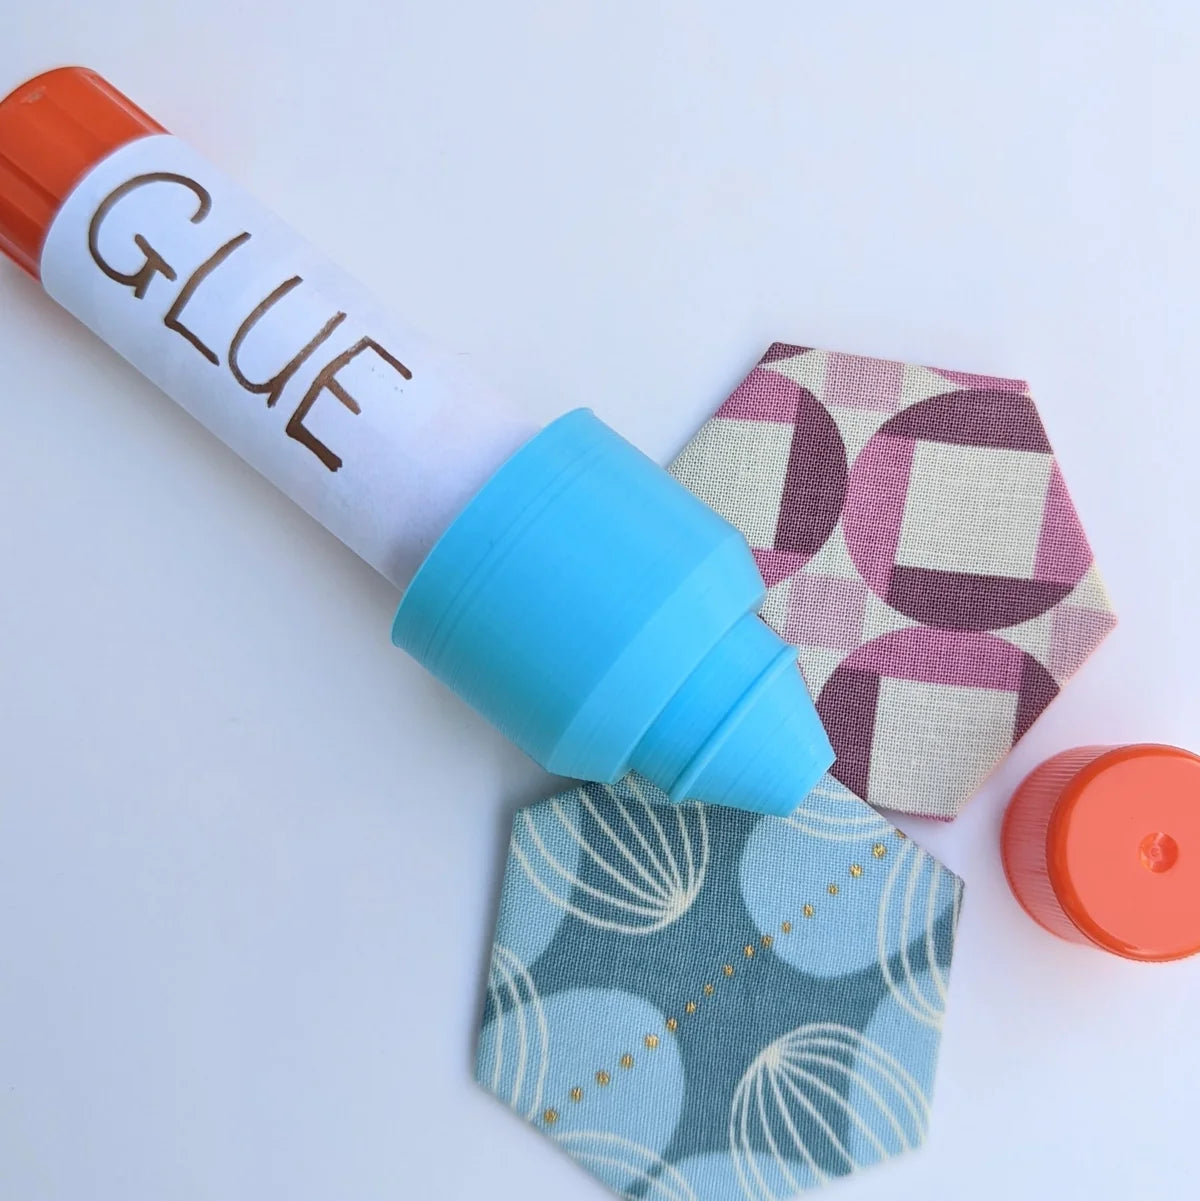 Glue Stick Precision Tip